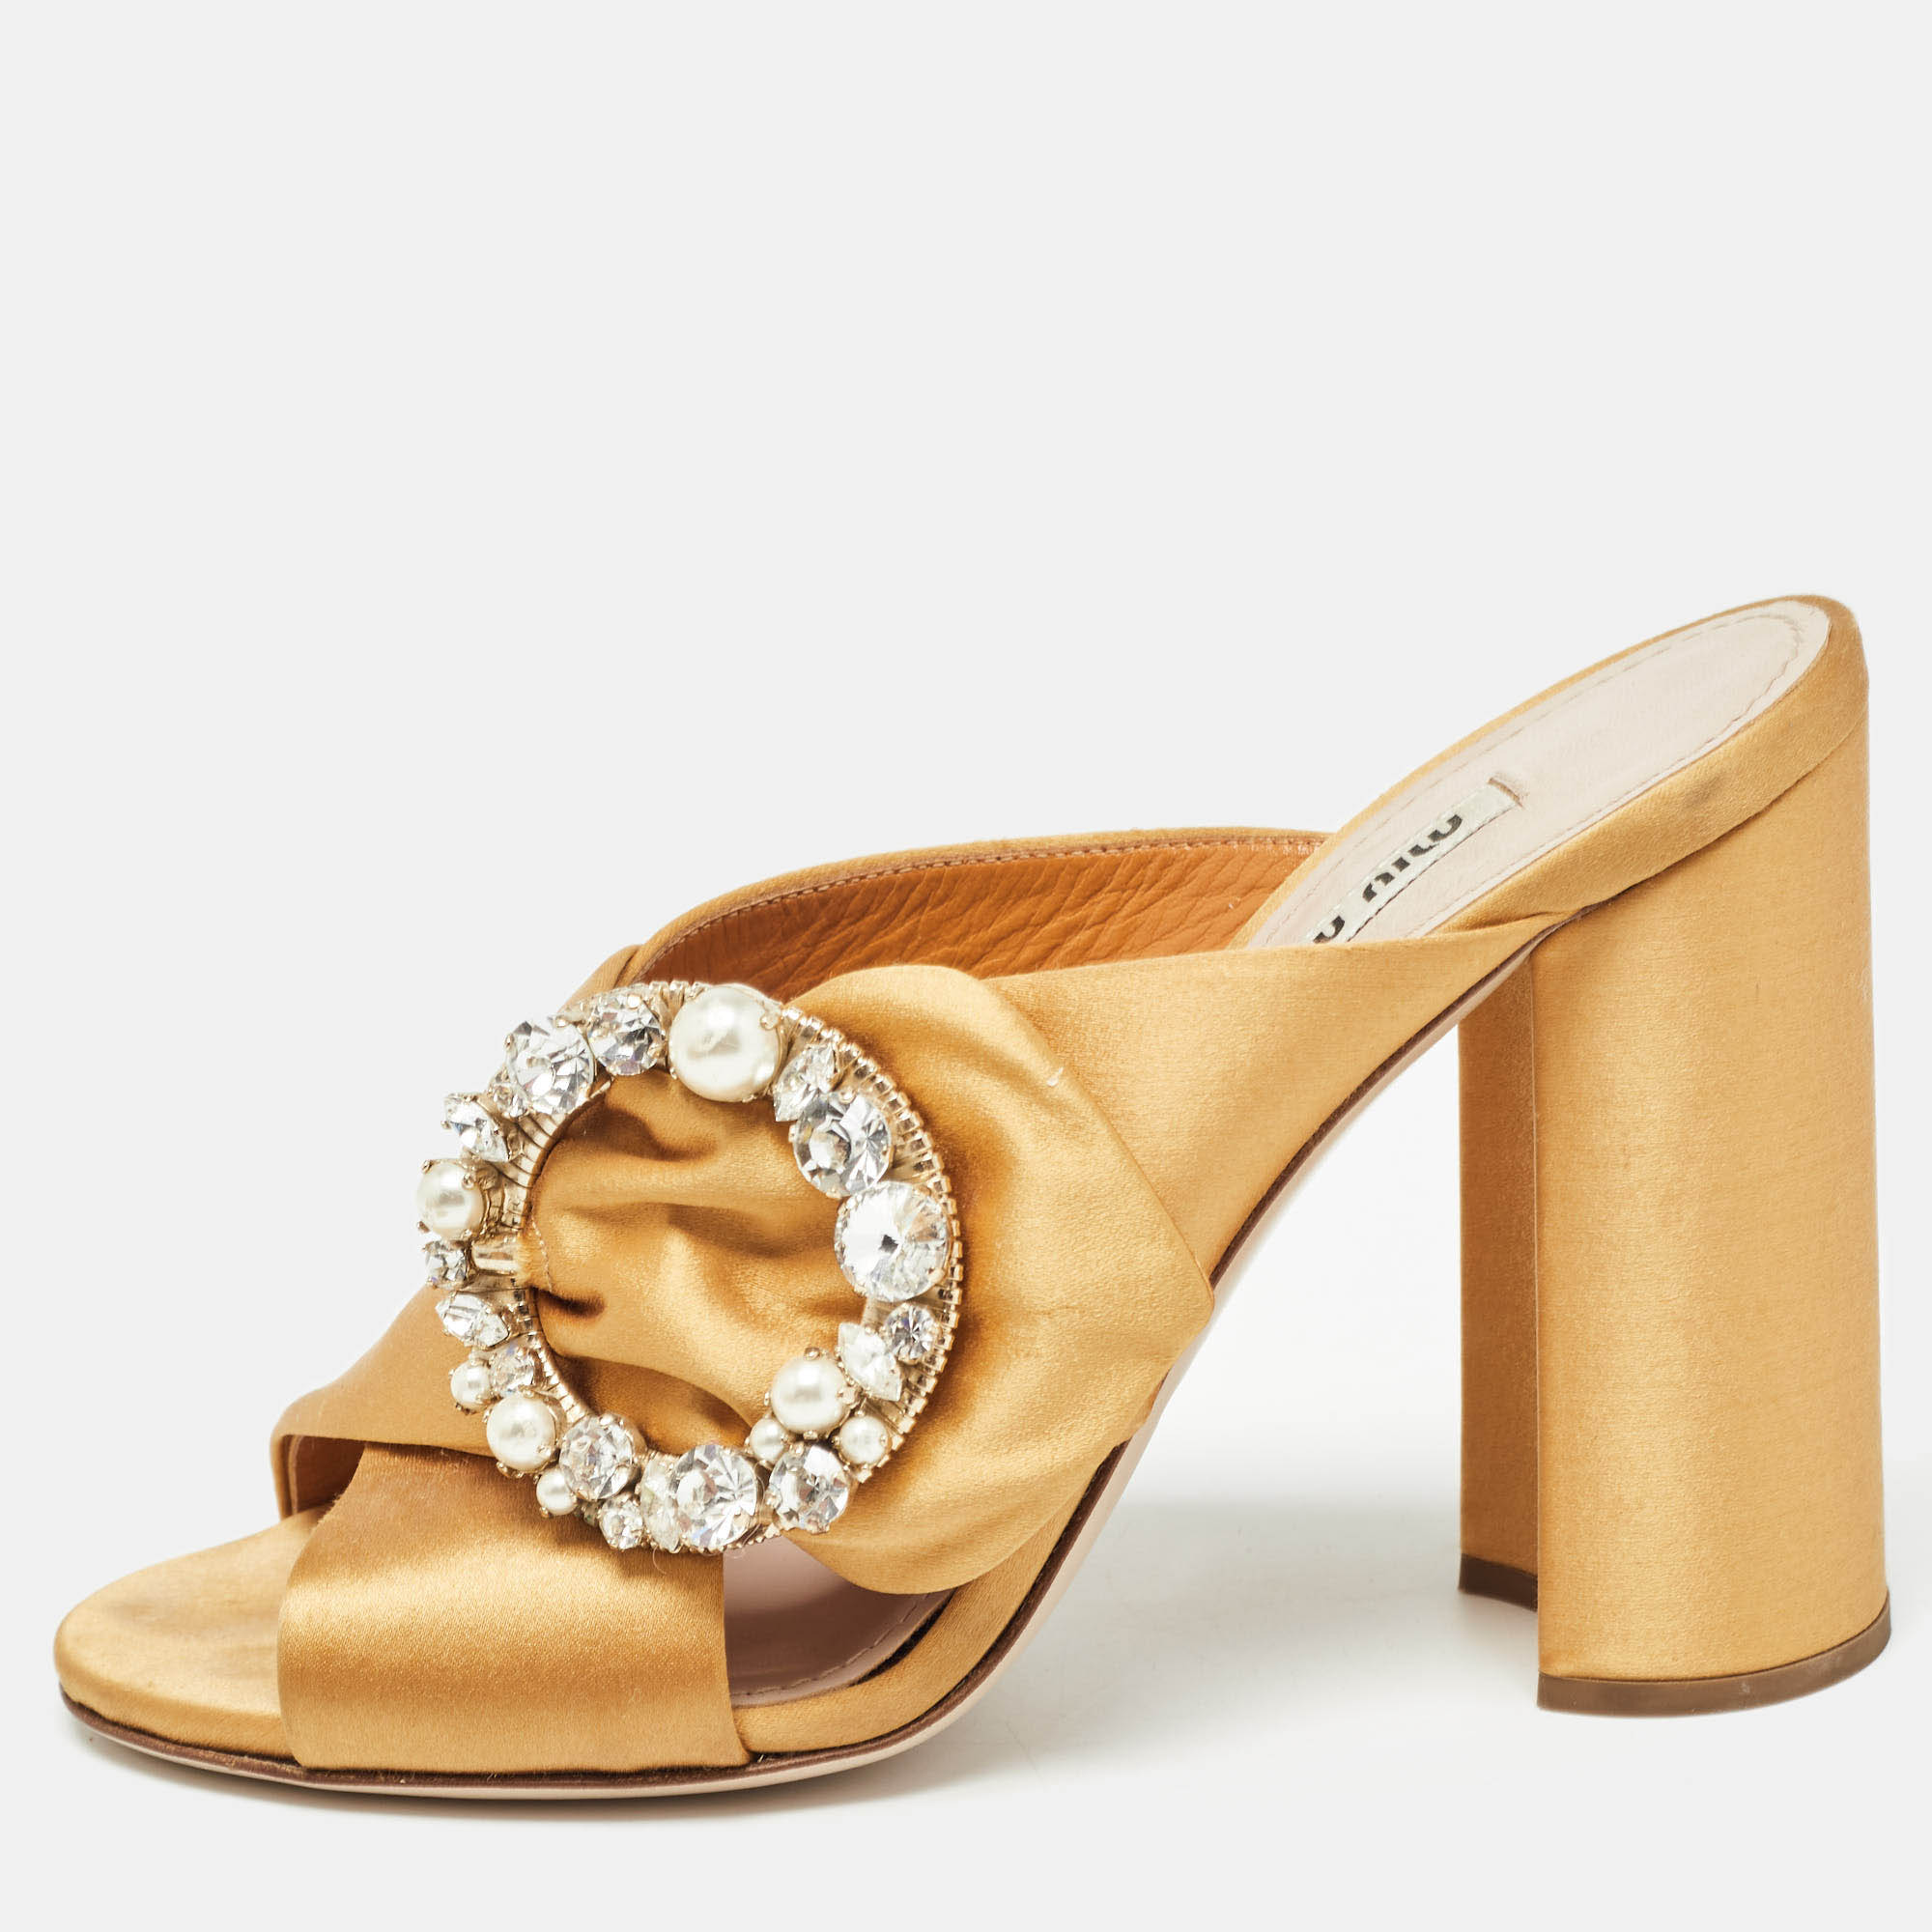 Miu miu brown satin crystal and faux pearl embellished brooch peep toe slide sandals size 37